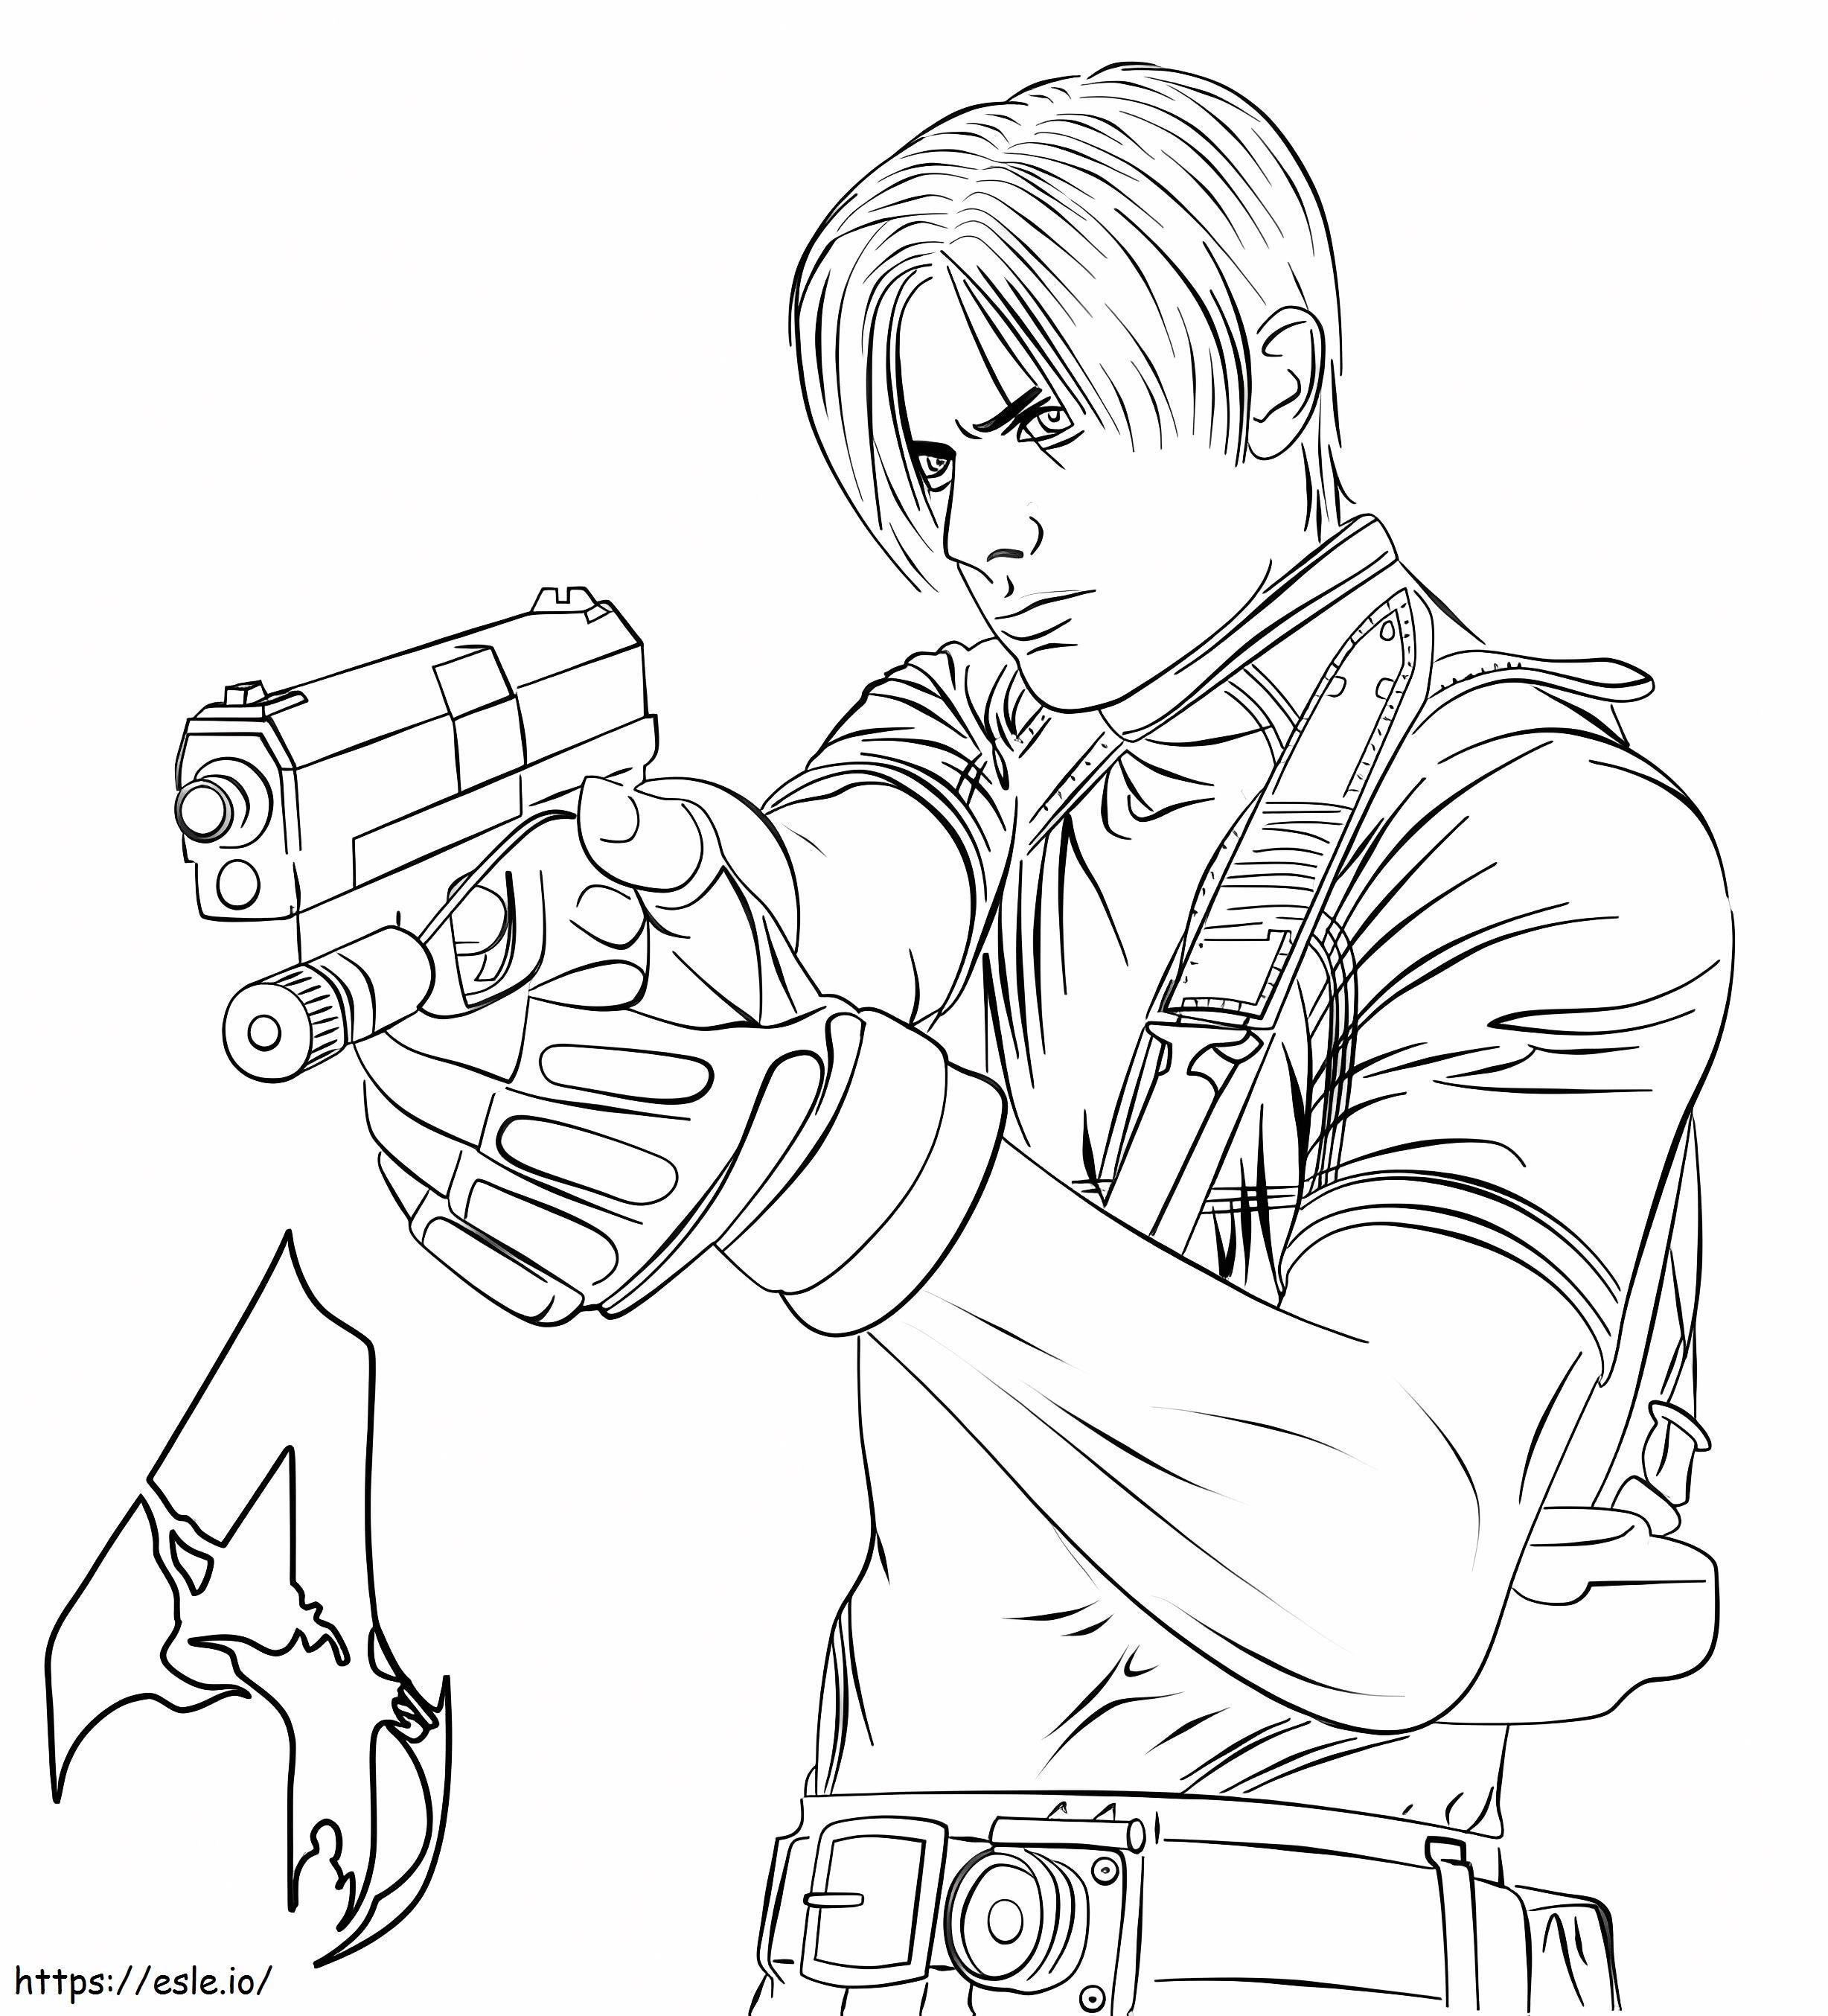 Leon din Resident Evil de colorat